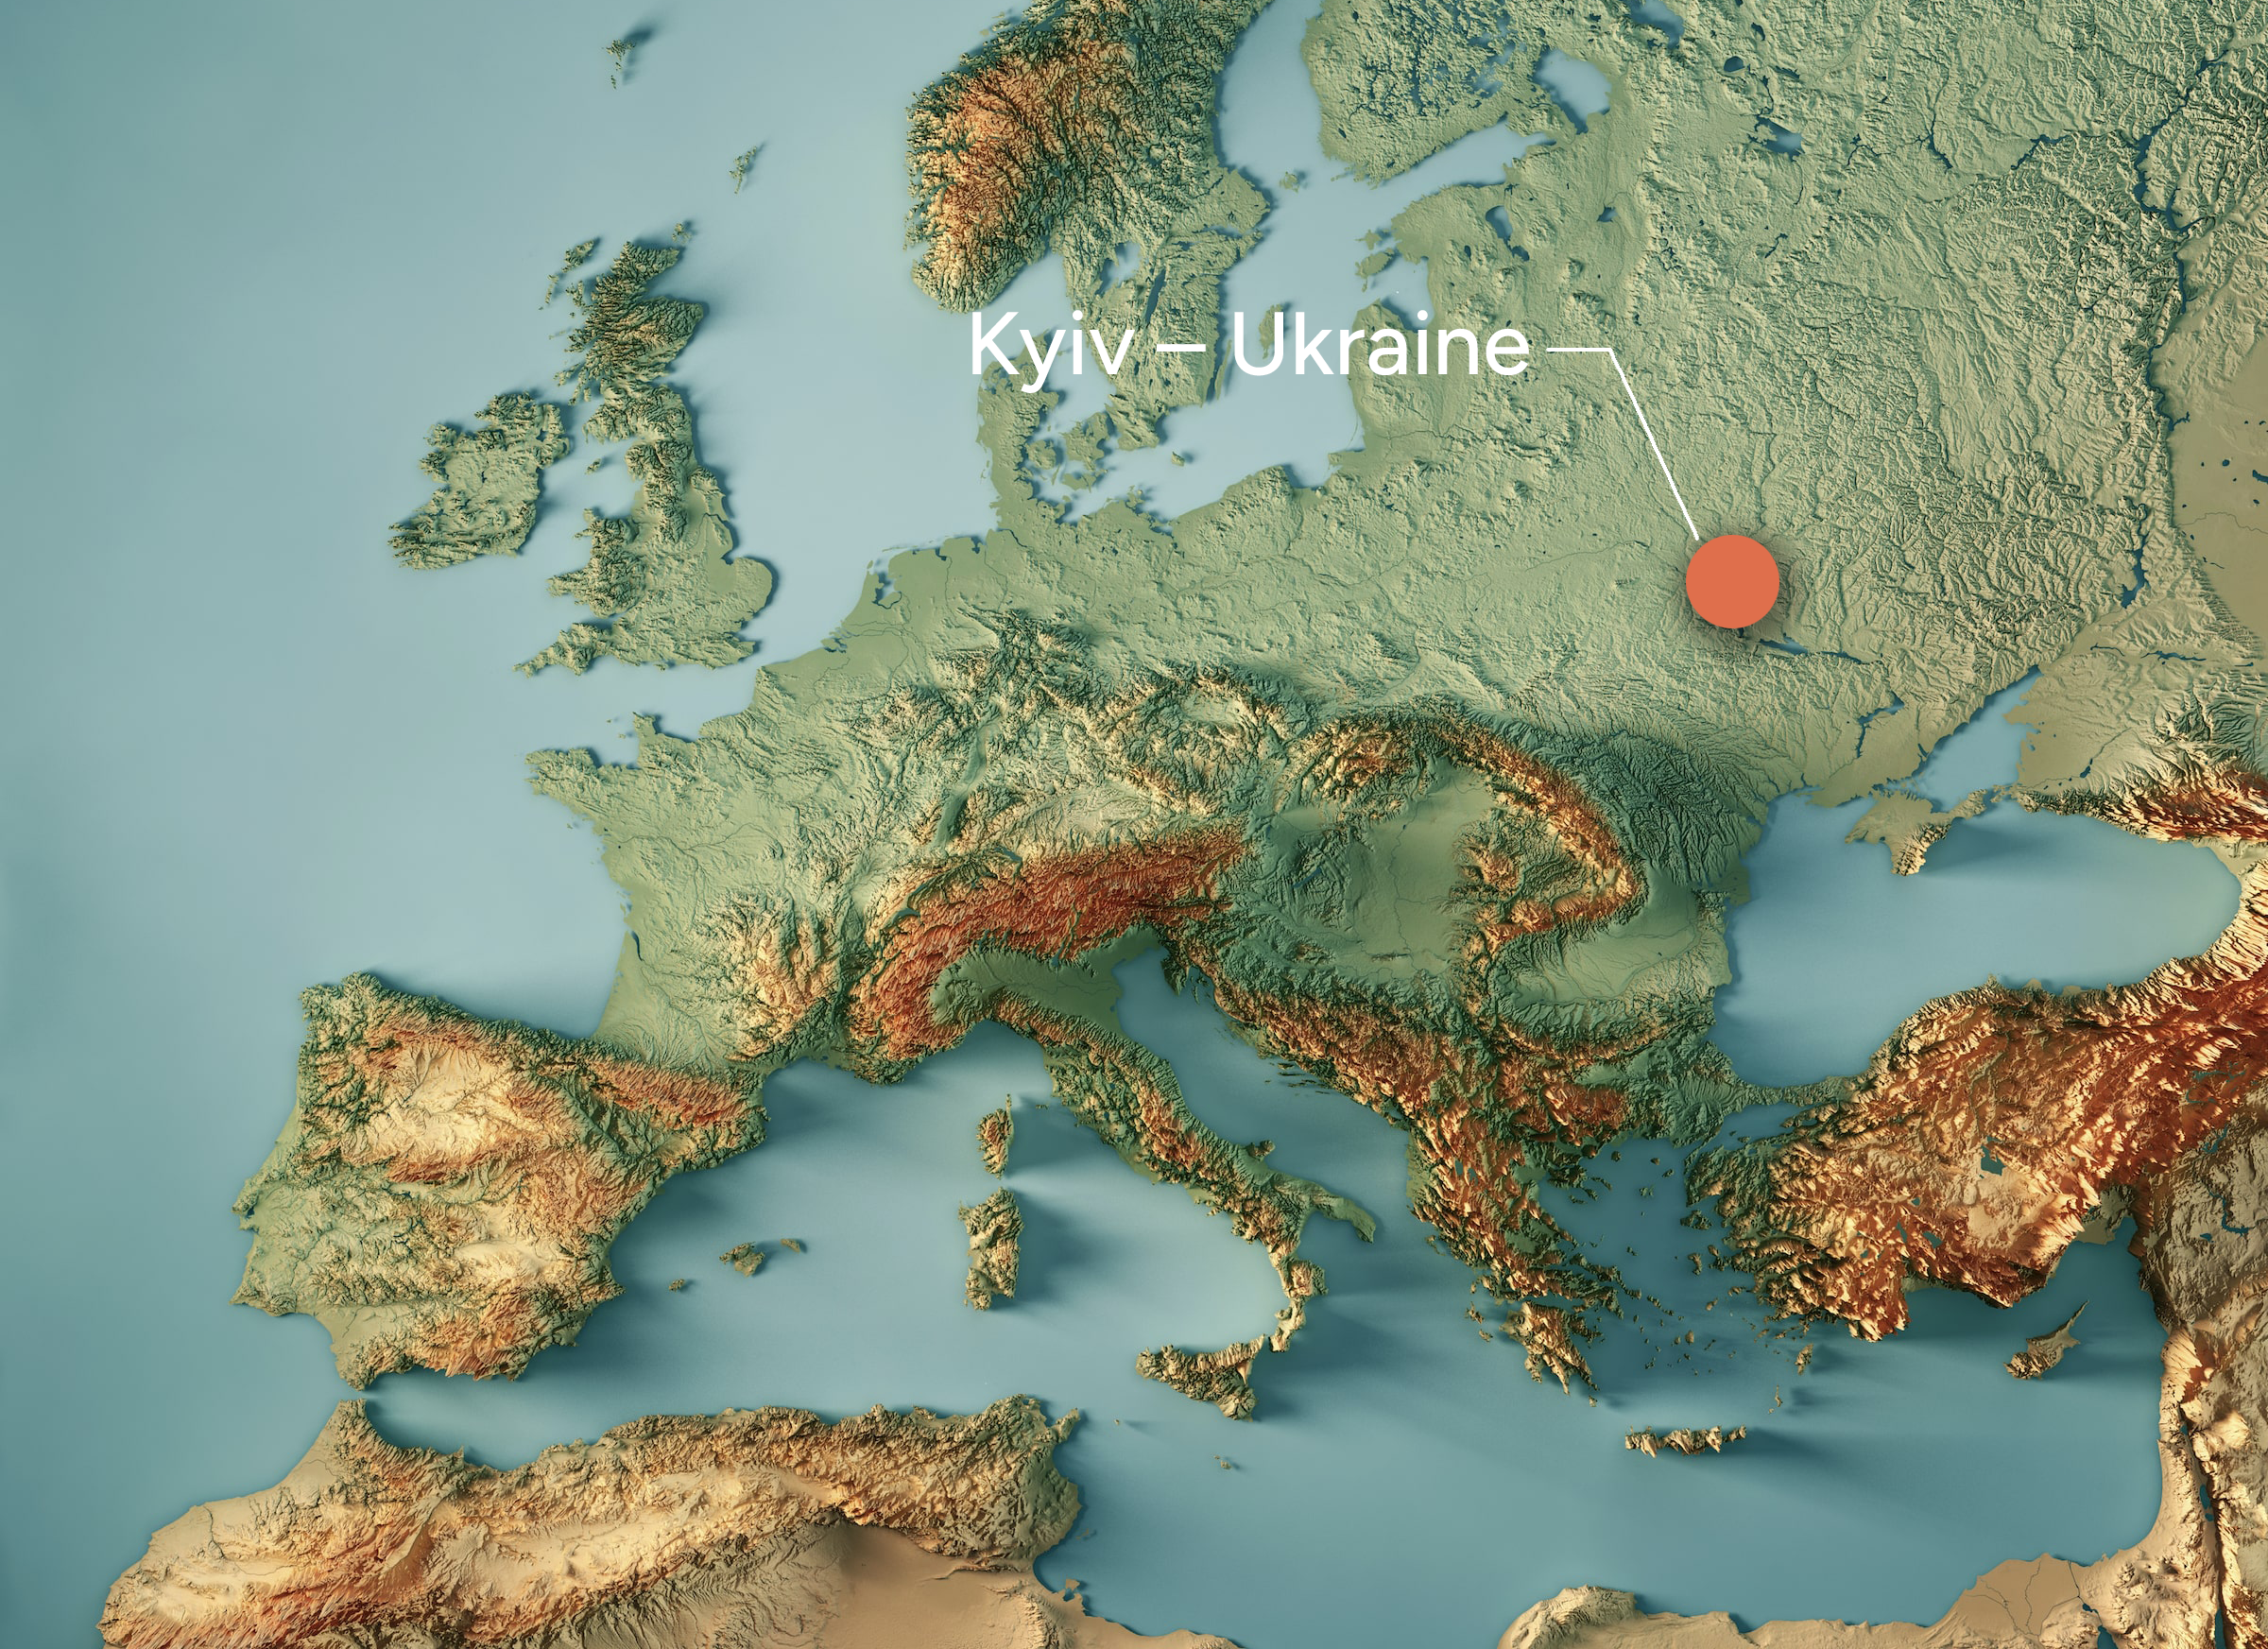 Topography map of Europe highlighting Kyiv, Ukraine